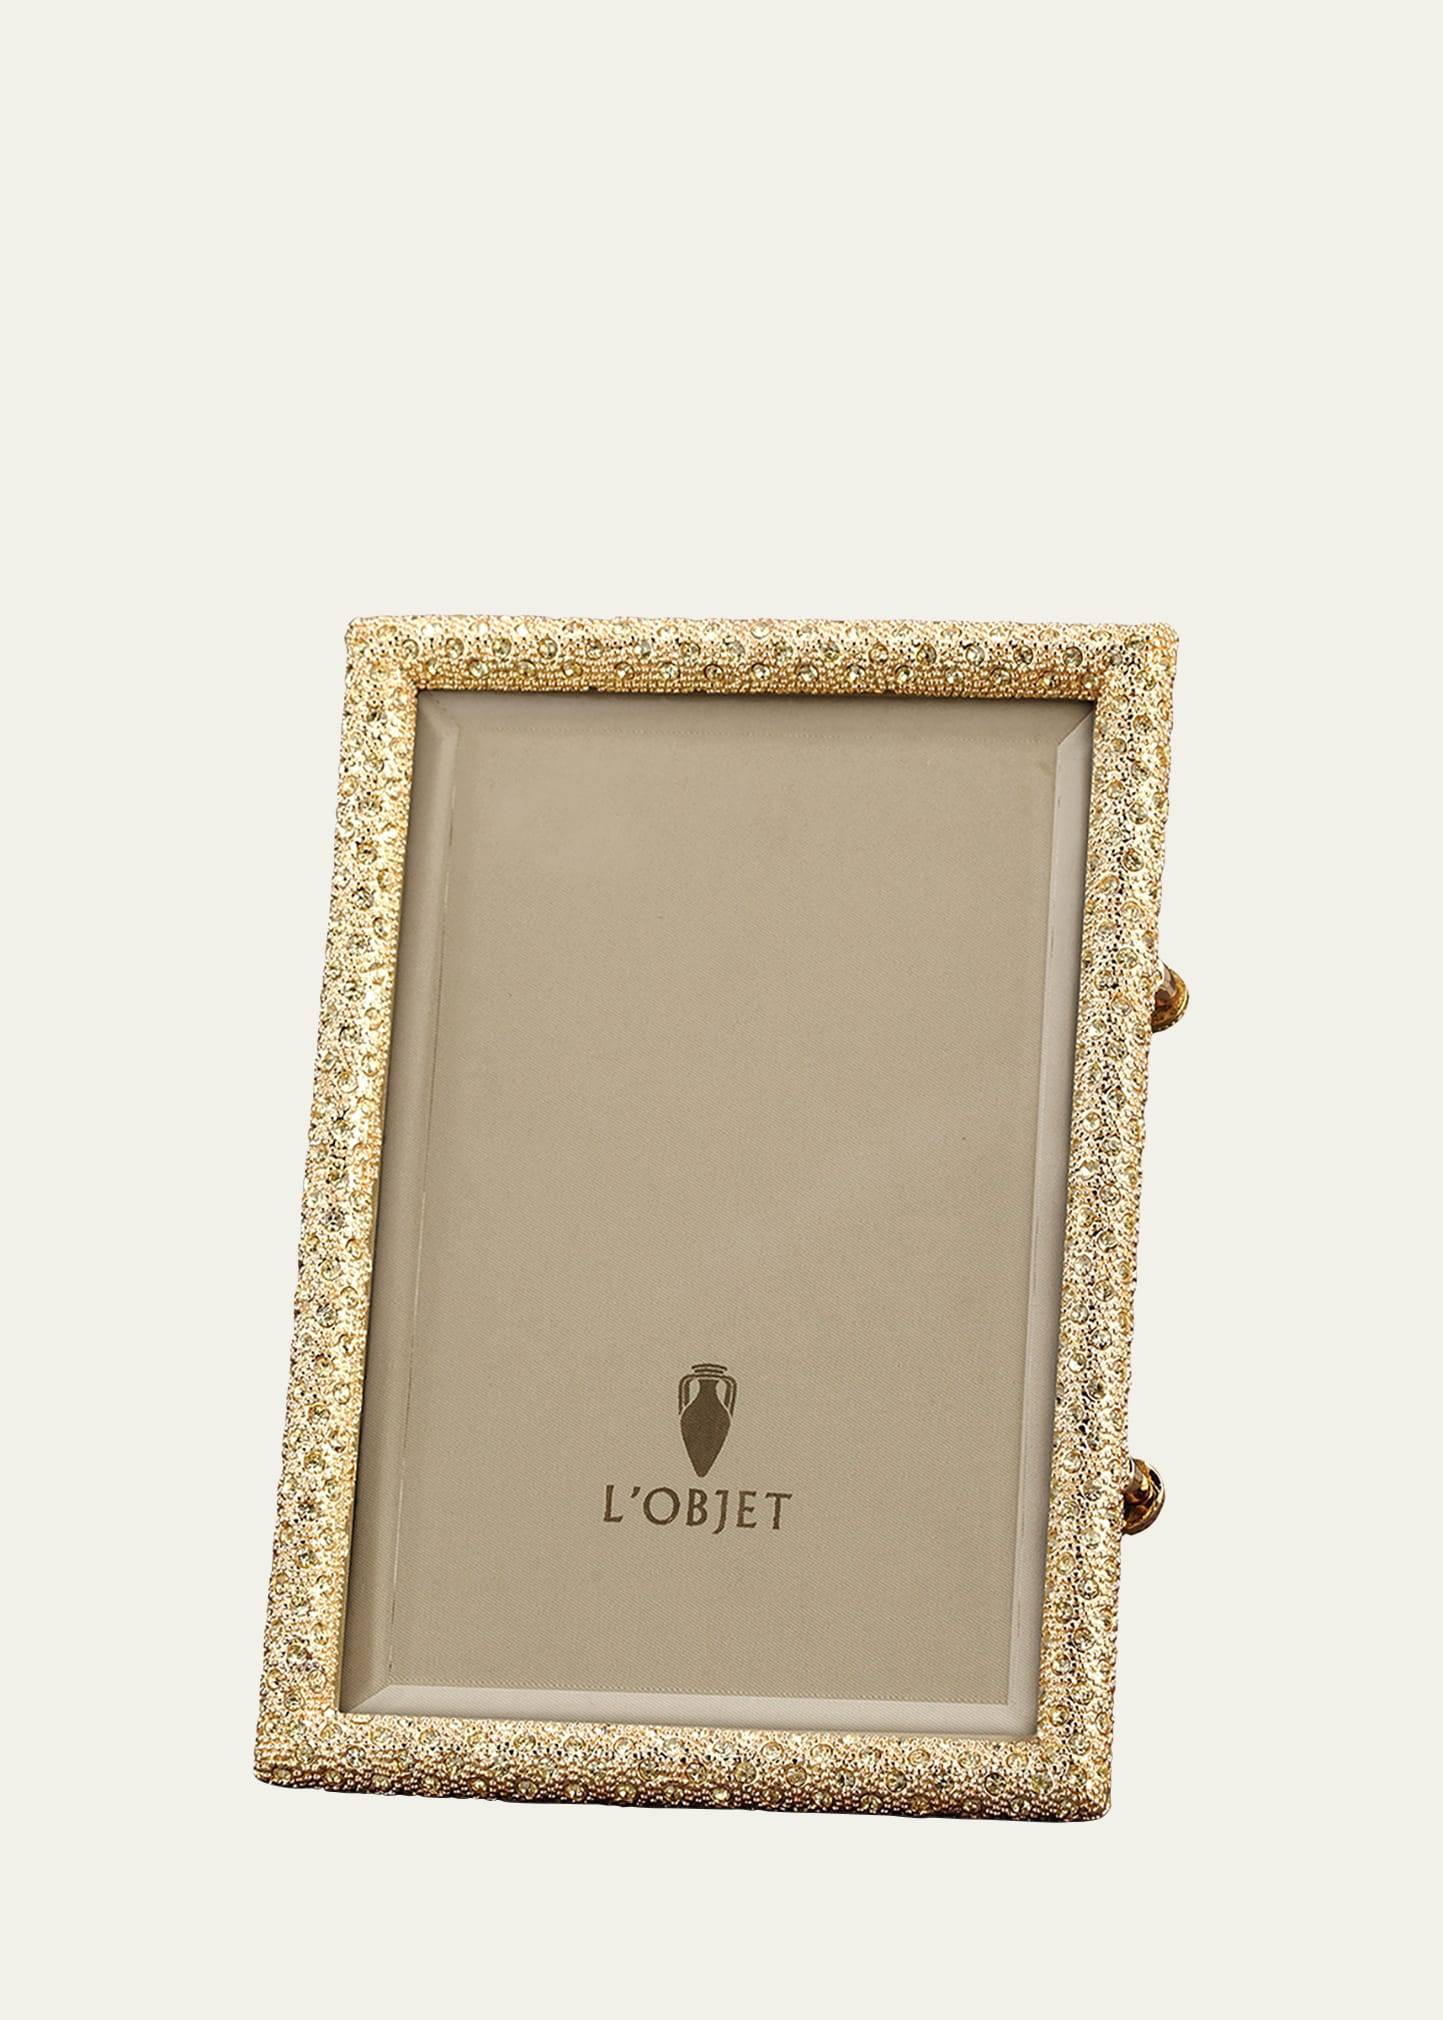 L'objet Pave Gold Picture Frame, 8" X 10"